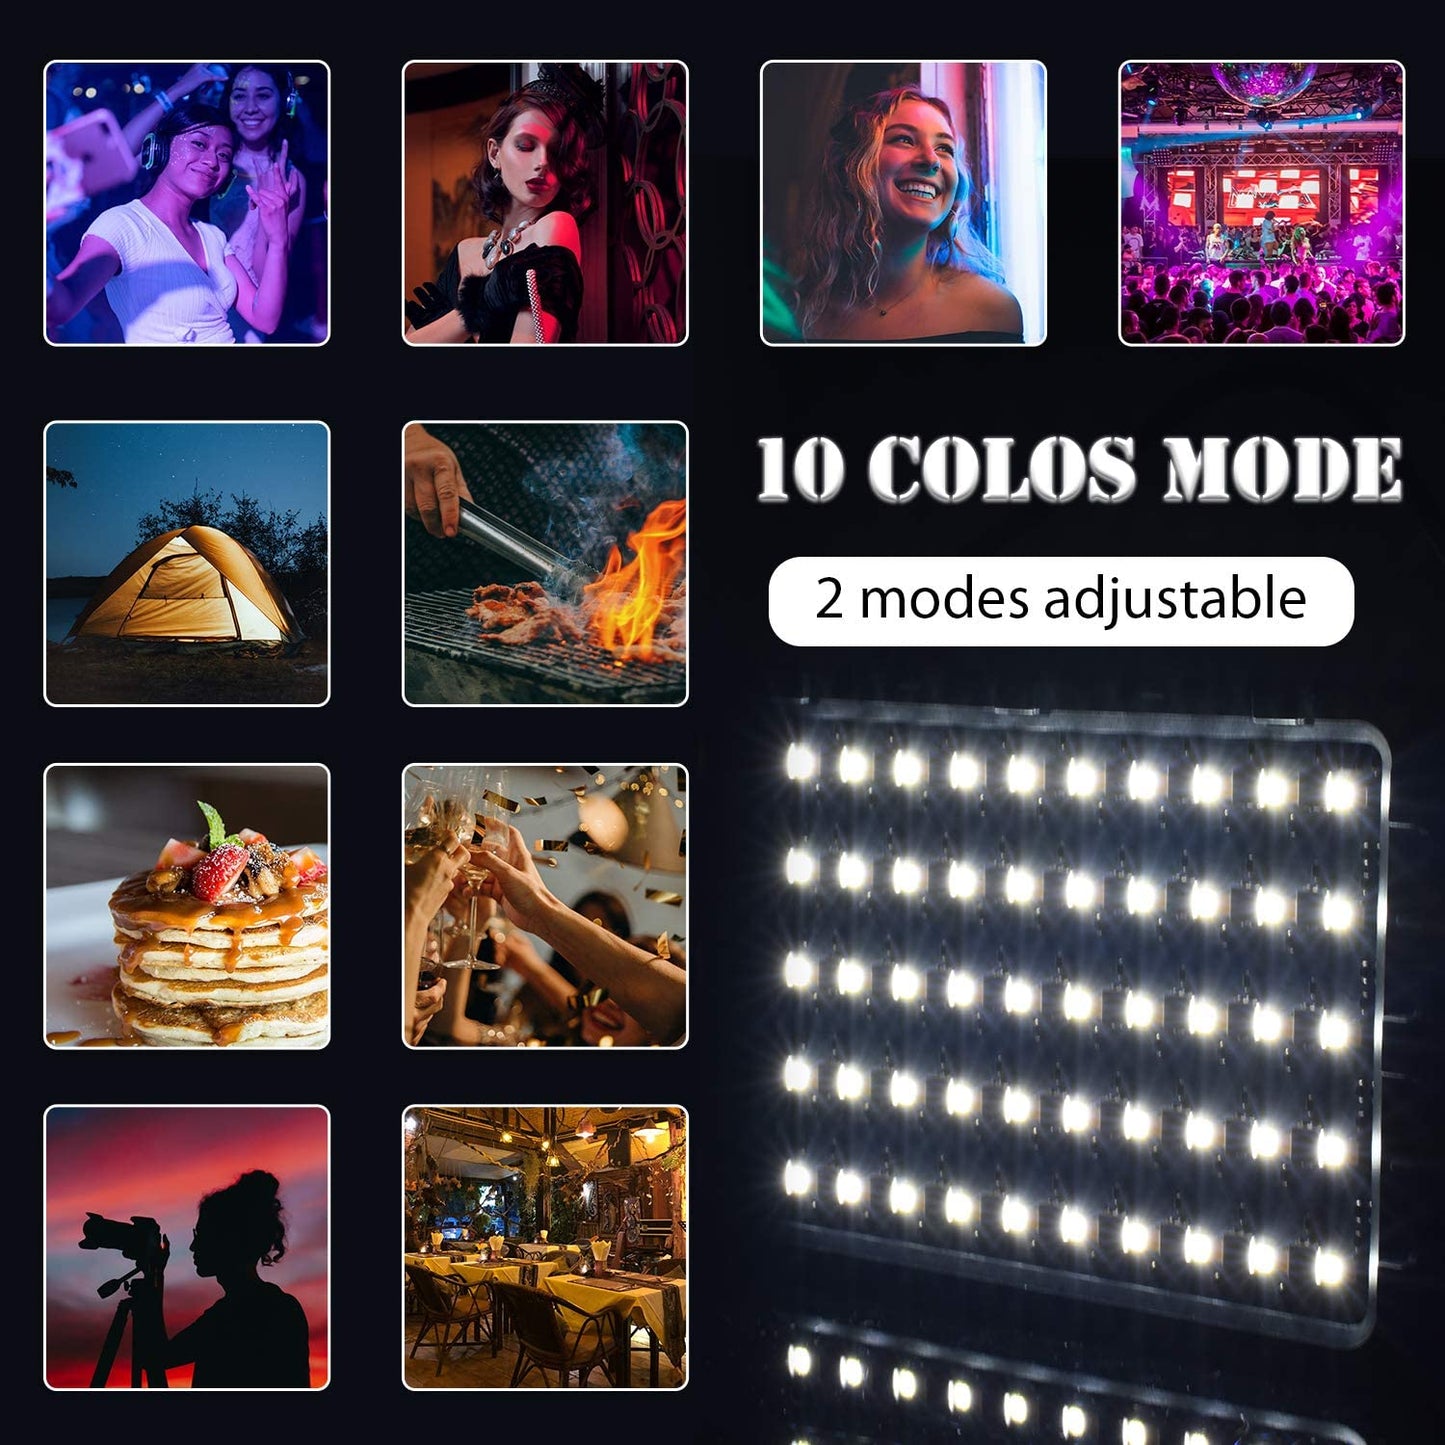 Ideas Illuminated EMART 5500K RGB LED Photography Lighting ,Photo Video Studio Light with Flexible Tripod - EMART INTERNATIONAL, INC (Official Website)